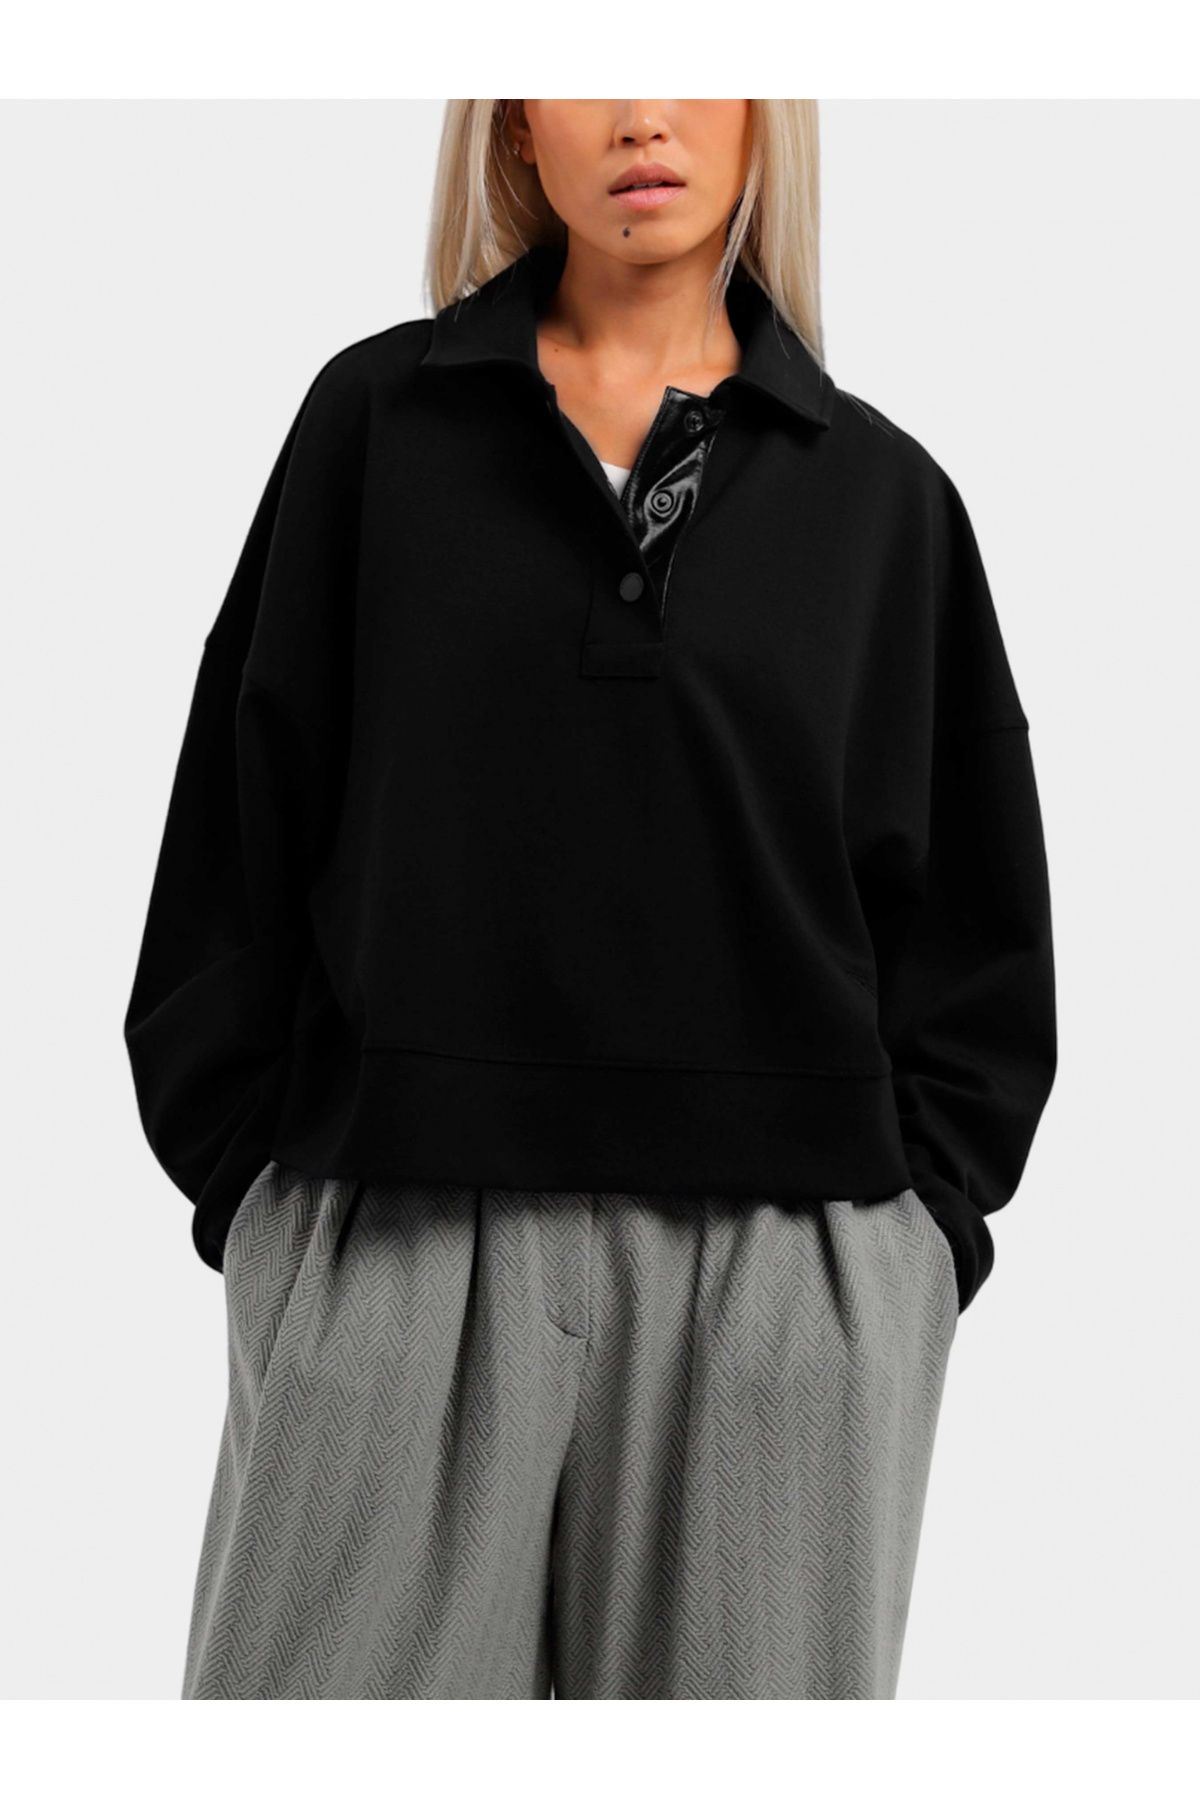 Emporio Armani Kadın Pamuklu Uzun Kollu Düğme Kapamalı Siyah Sweatshirt 6R2M7U 2JRKZ-0999